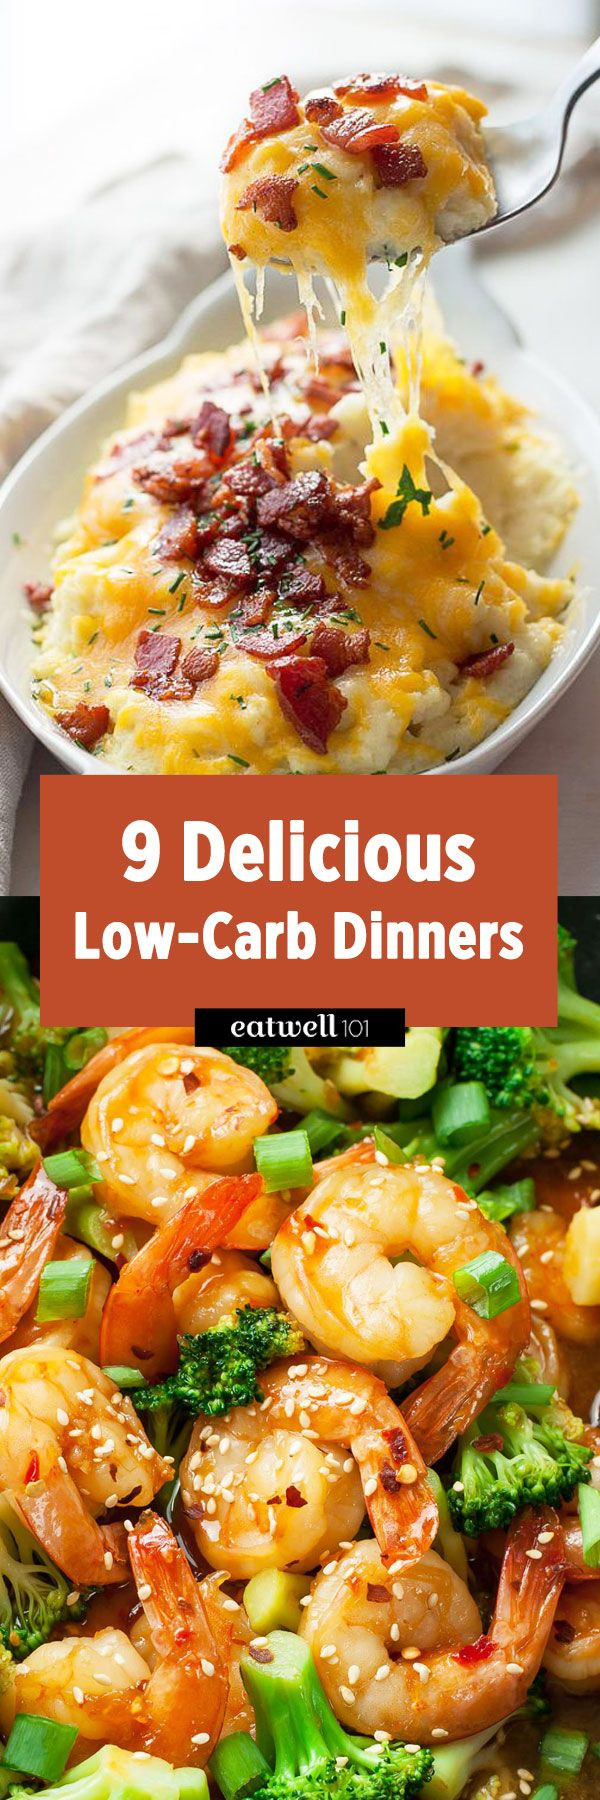 No Carb Dinner Recipes
 Best 25 No carb dinner recipes ideas on Pinterest